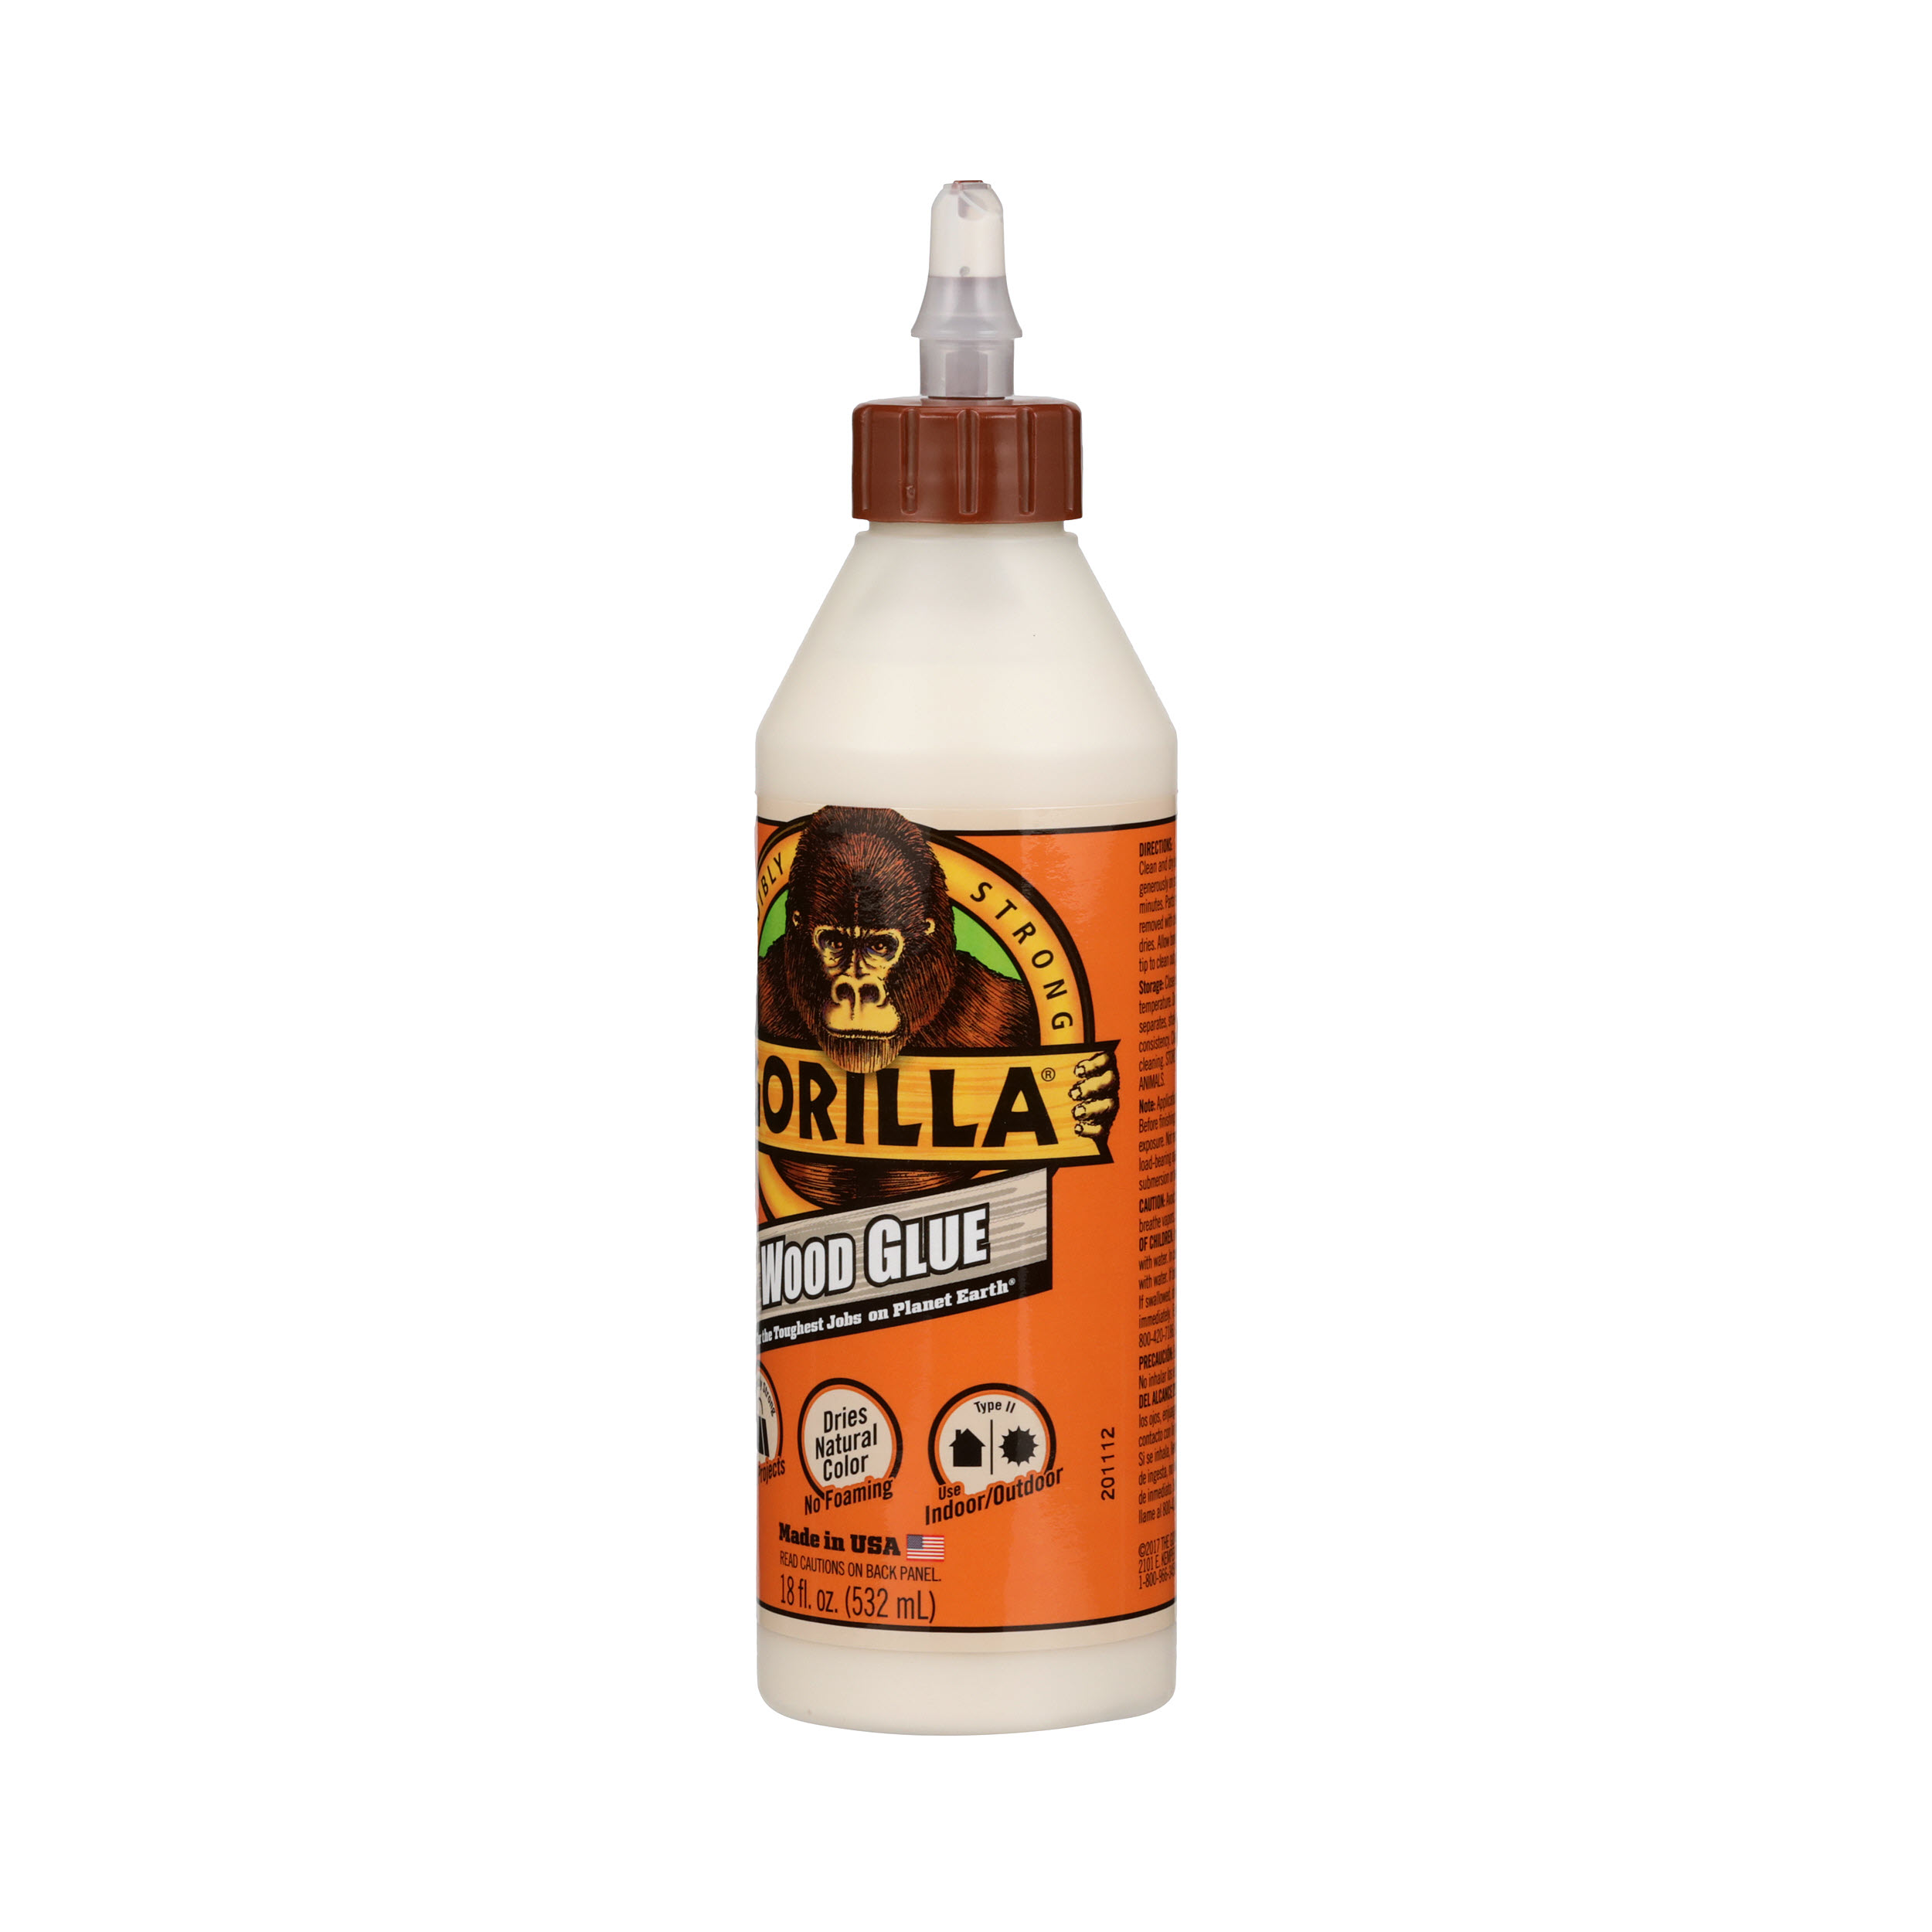 Gorilla Wood Glue, 18 Ounce Bottle, Natural Wood Color, (Pack of 1) 